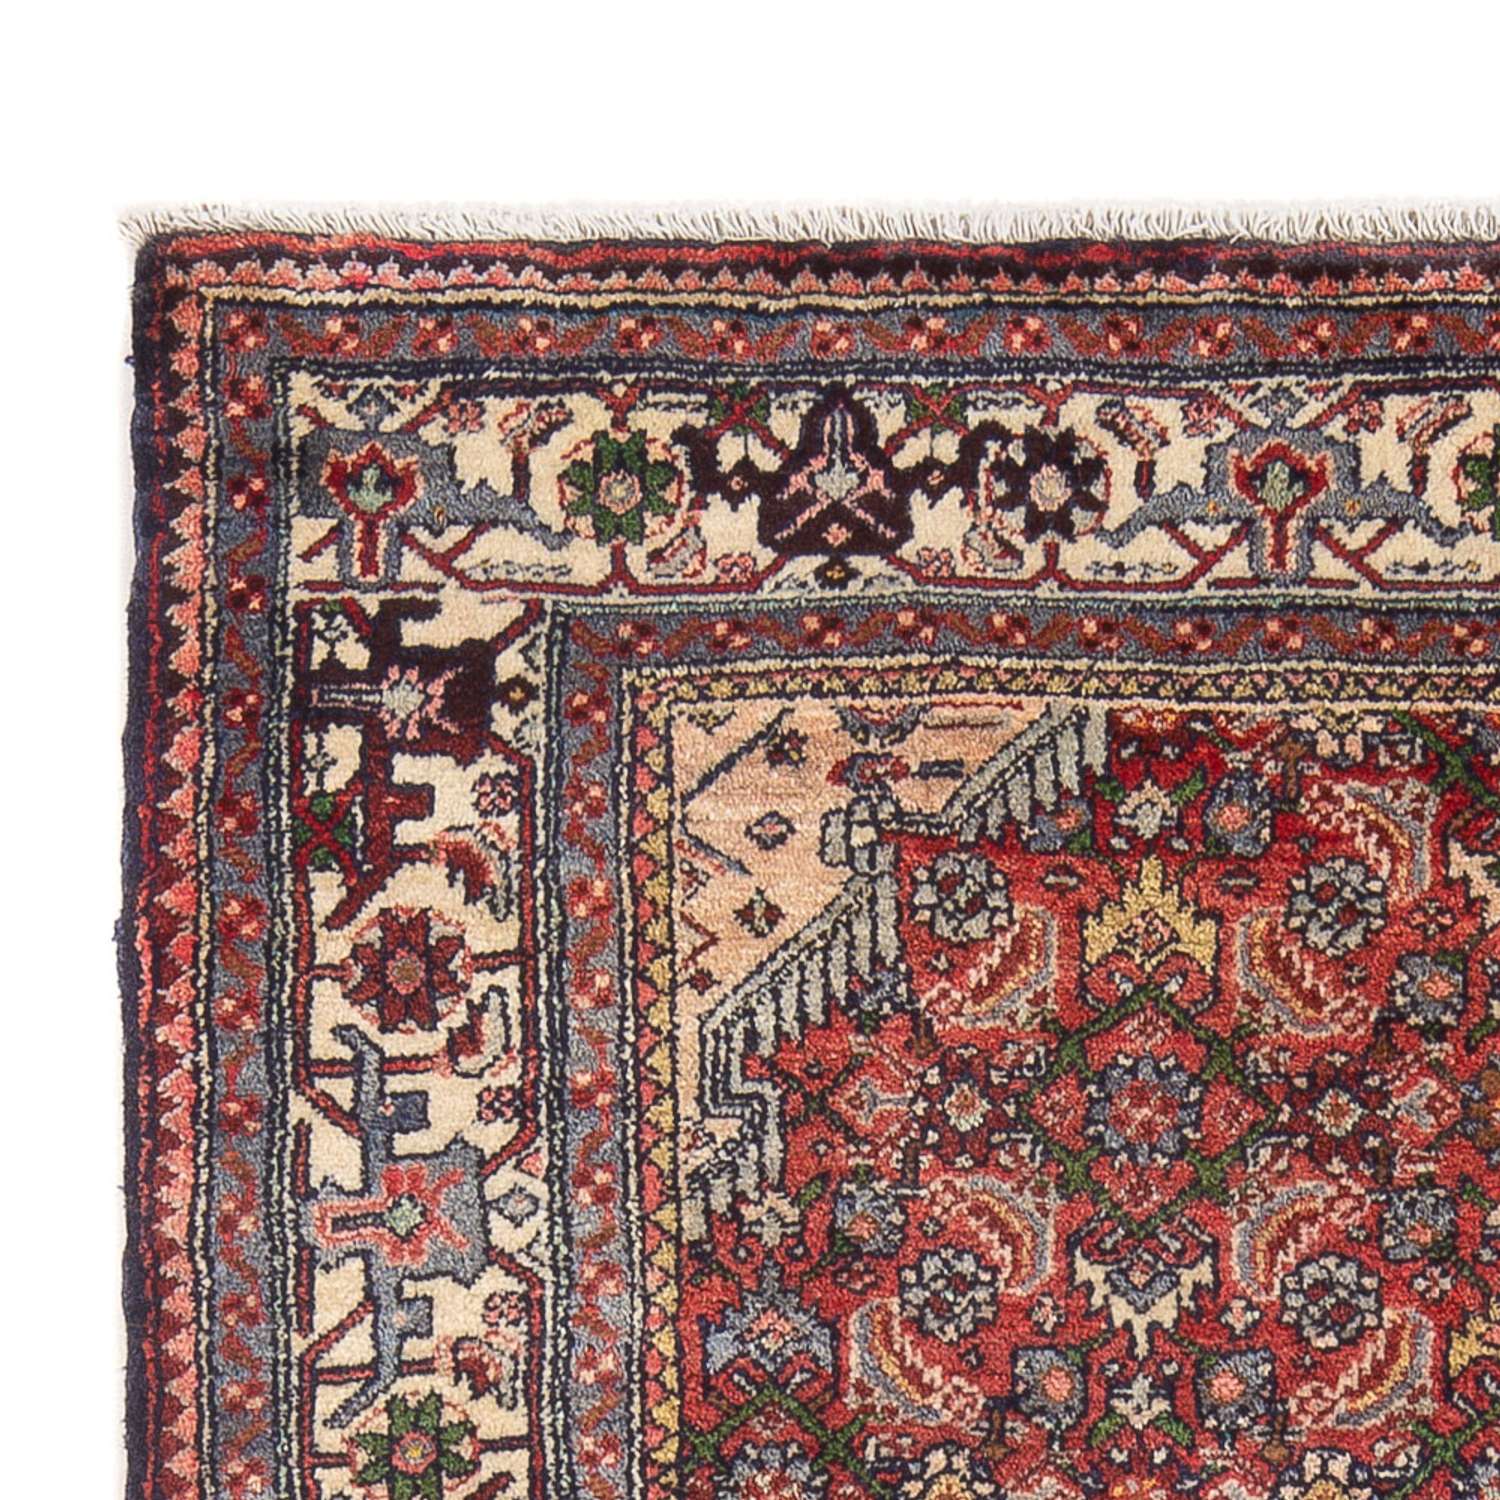 Persisk matta - Nomadic - 195 x 130 cm - röd